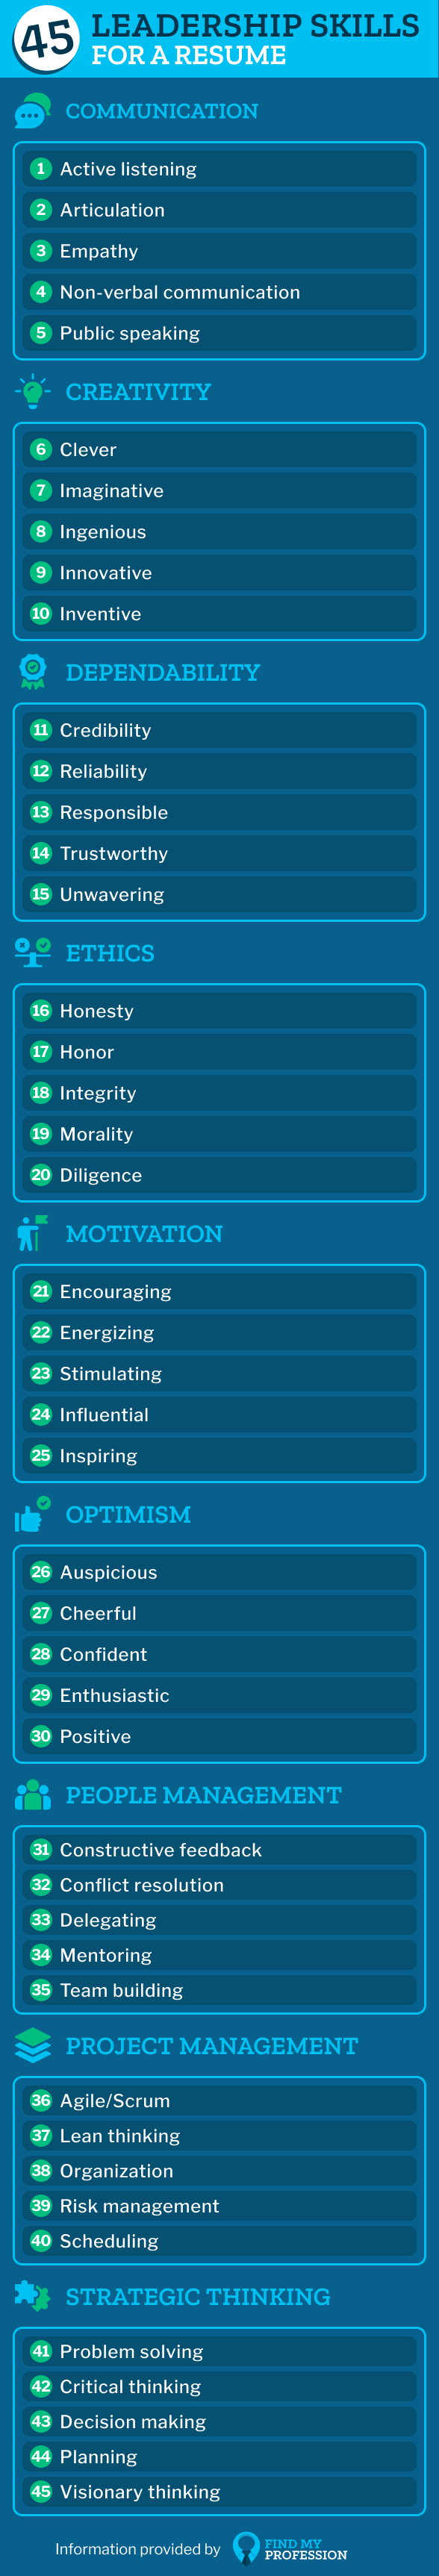 Key Leadership Skills for a Resume